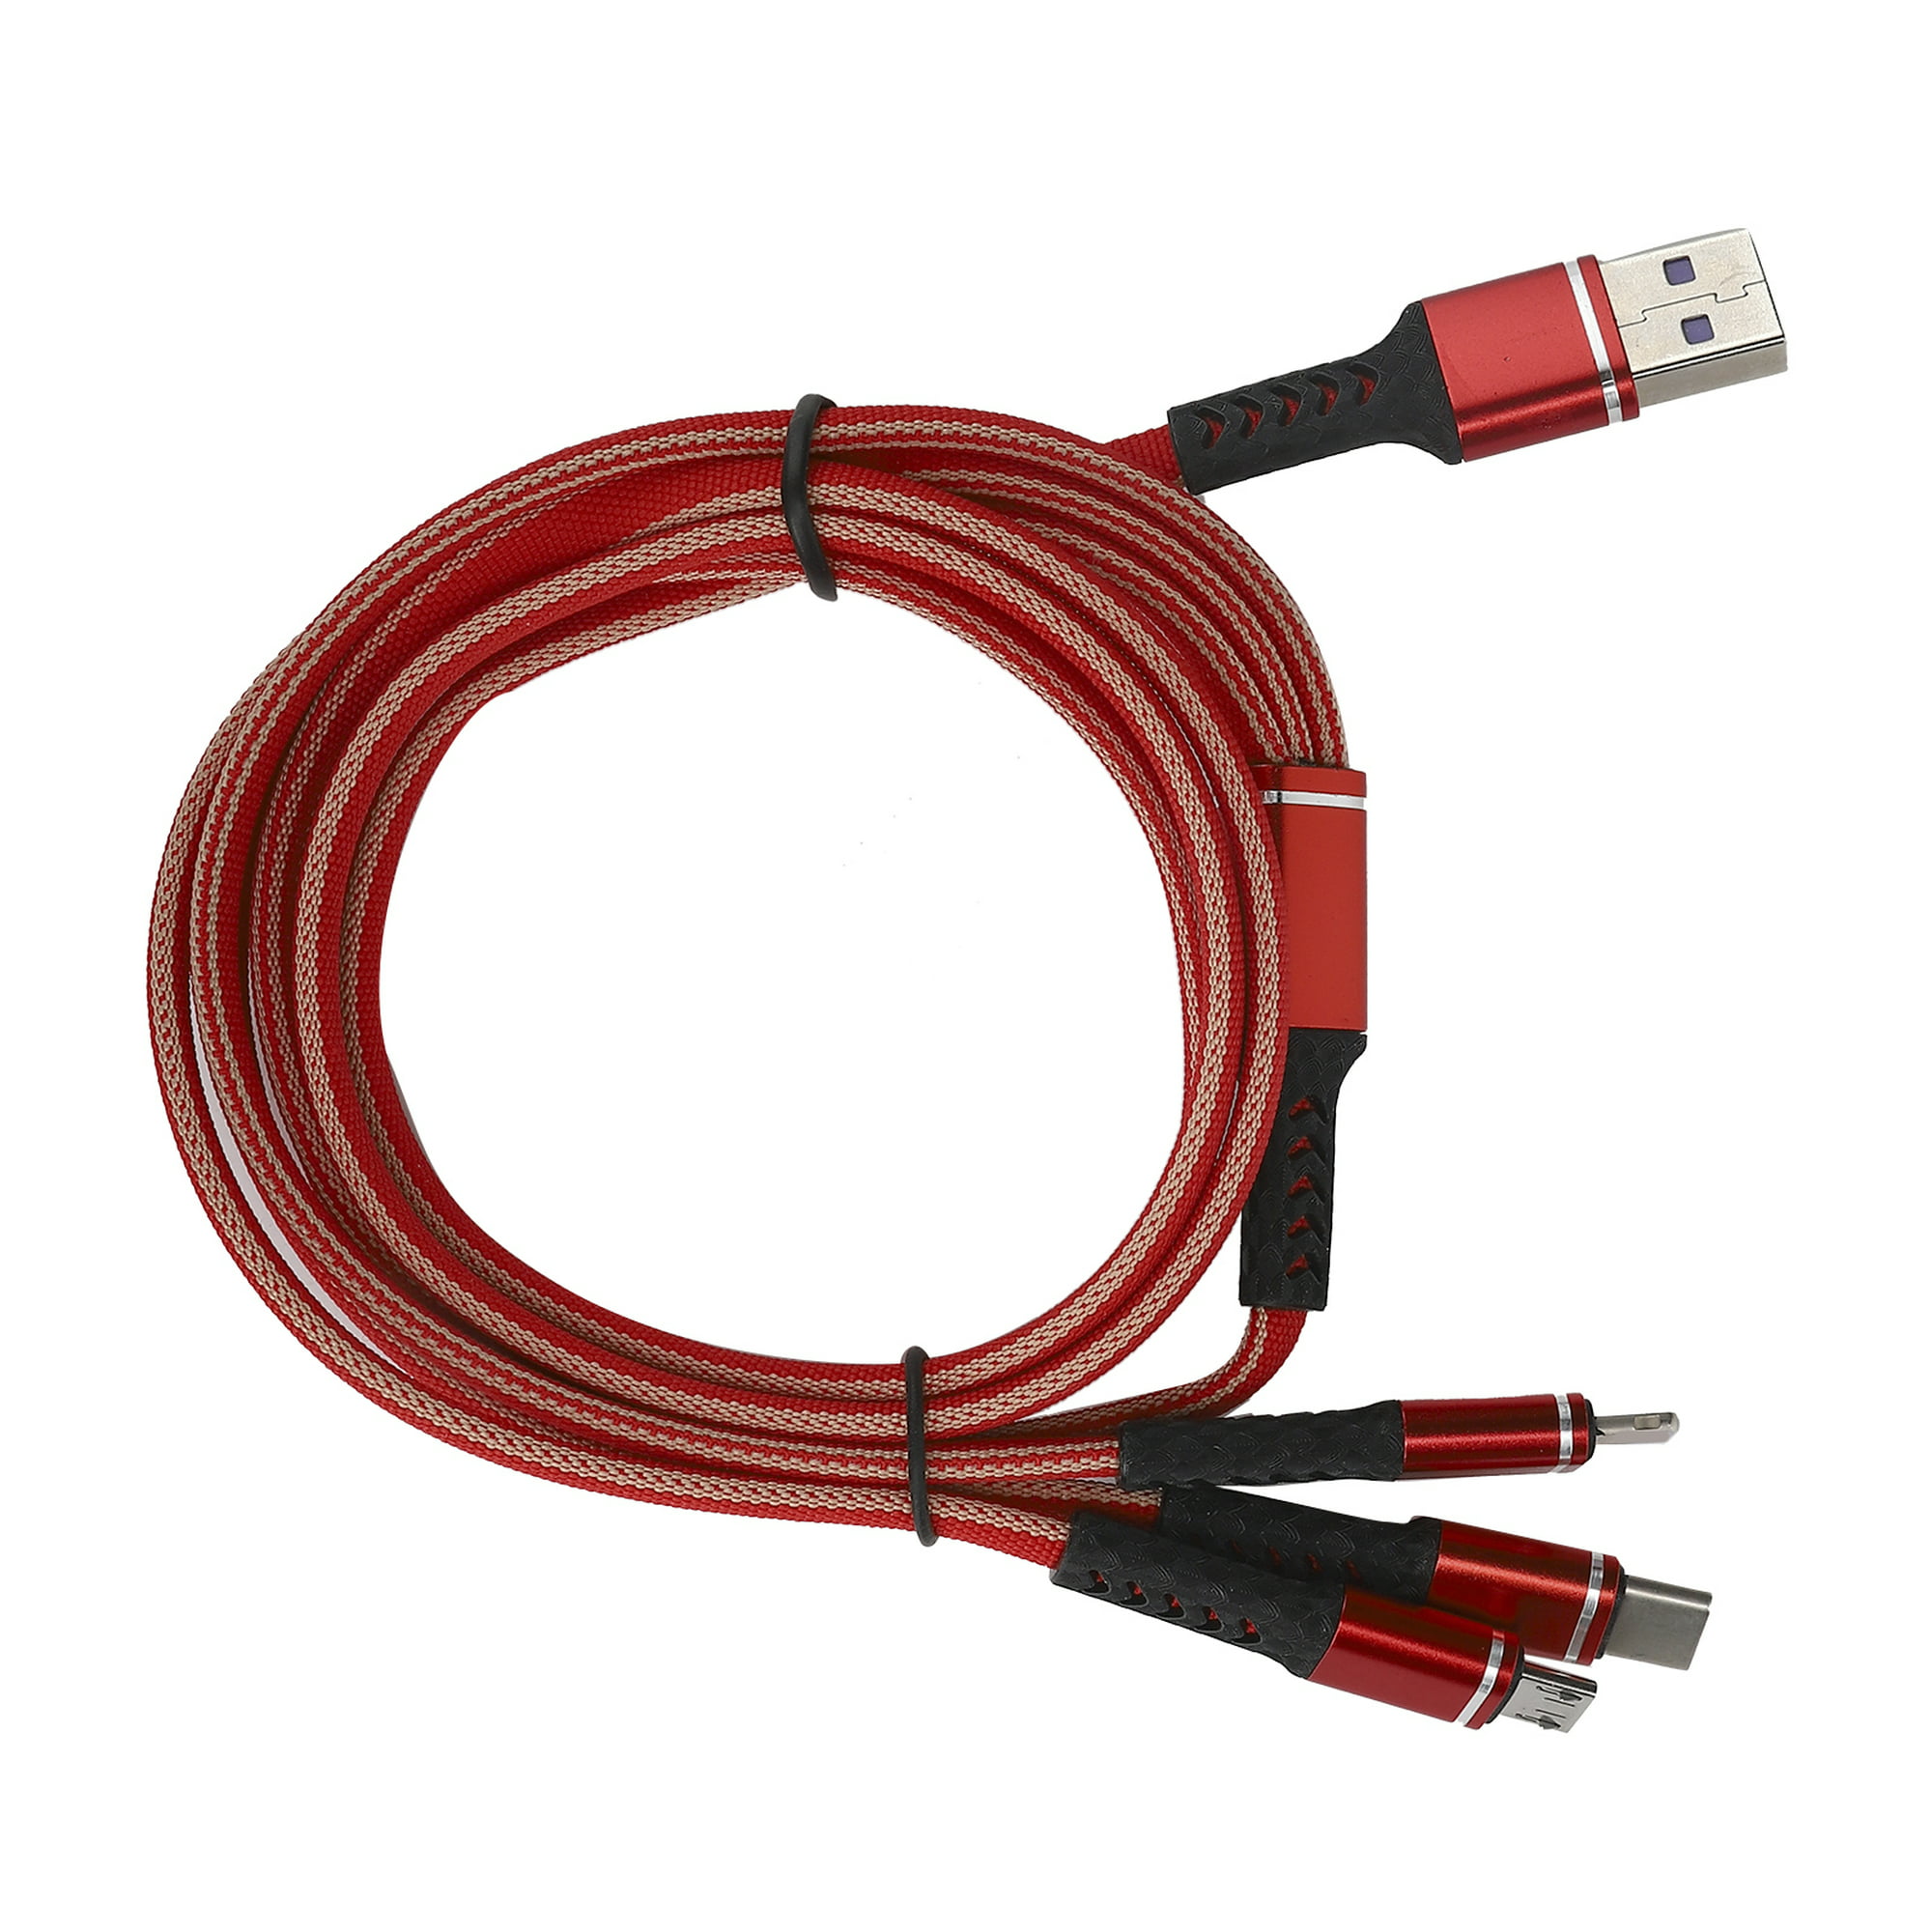 Cargador red micro USB (1 pieza) - Team Equipalia